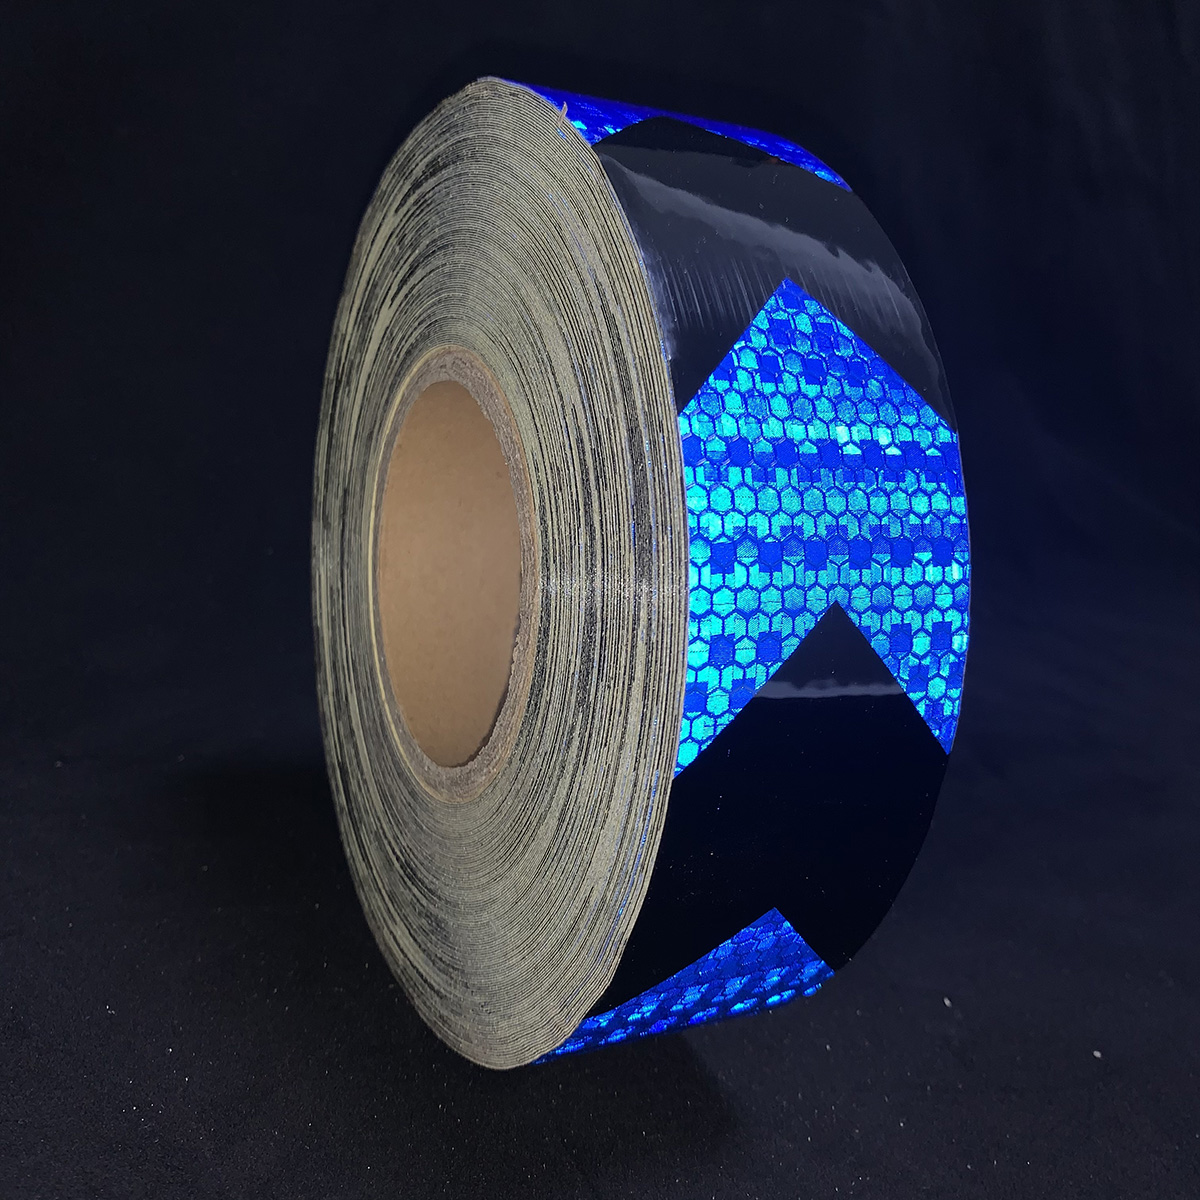 5cm*45m Black and Blue PVC Honeycomb Arrow Reflective Tape